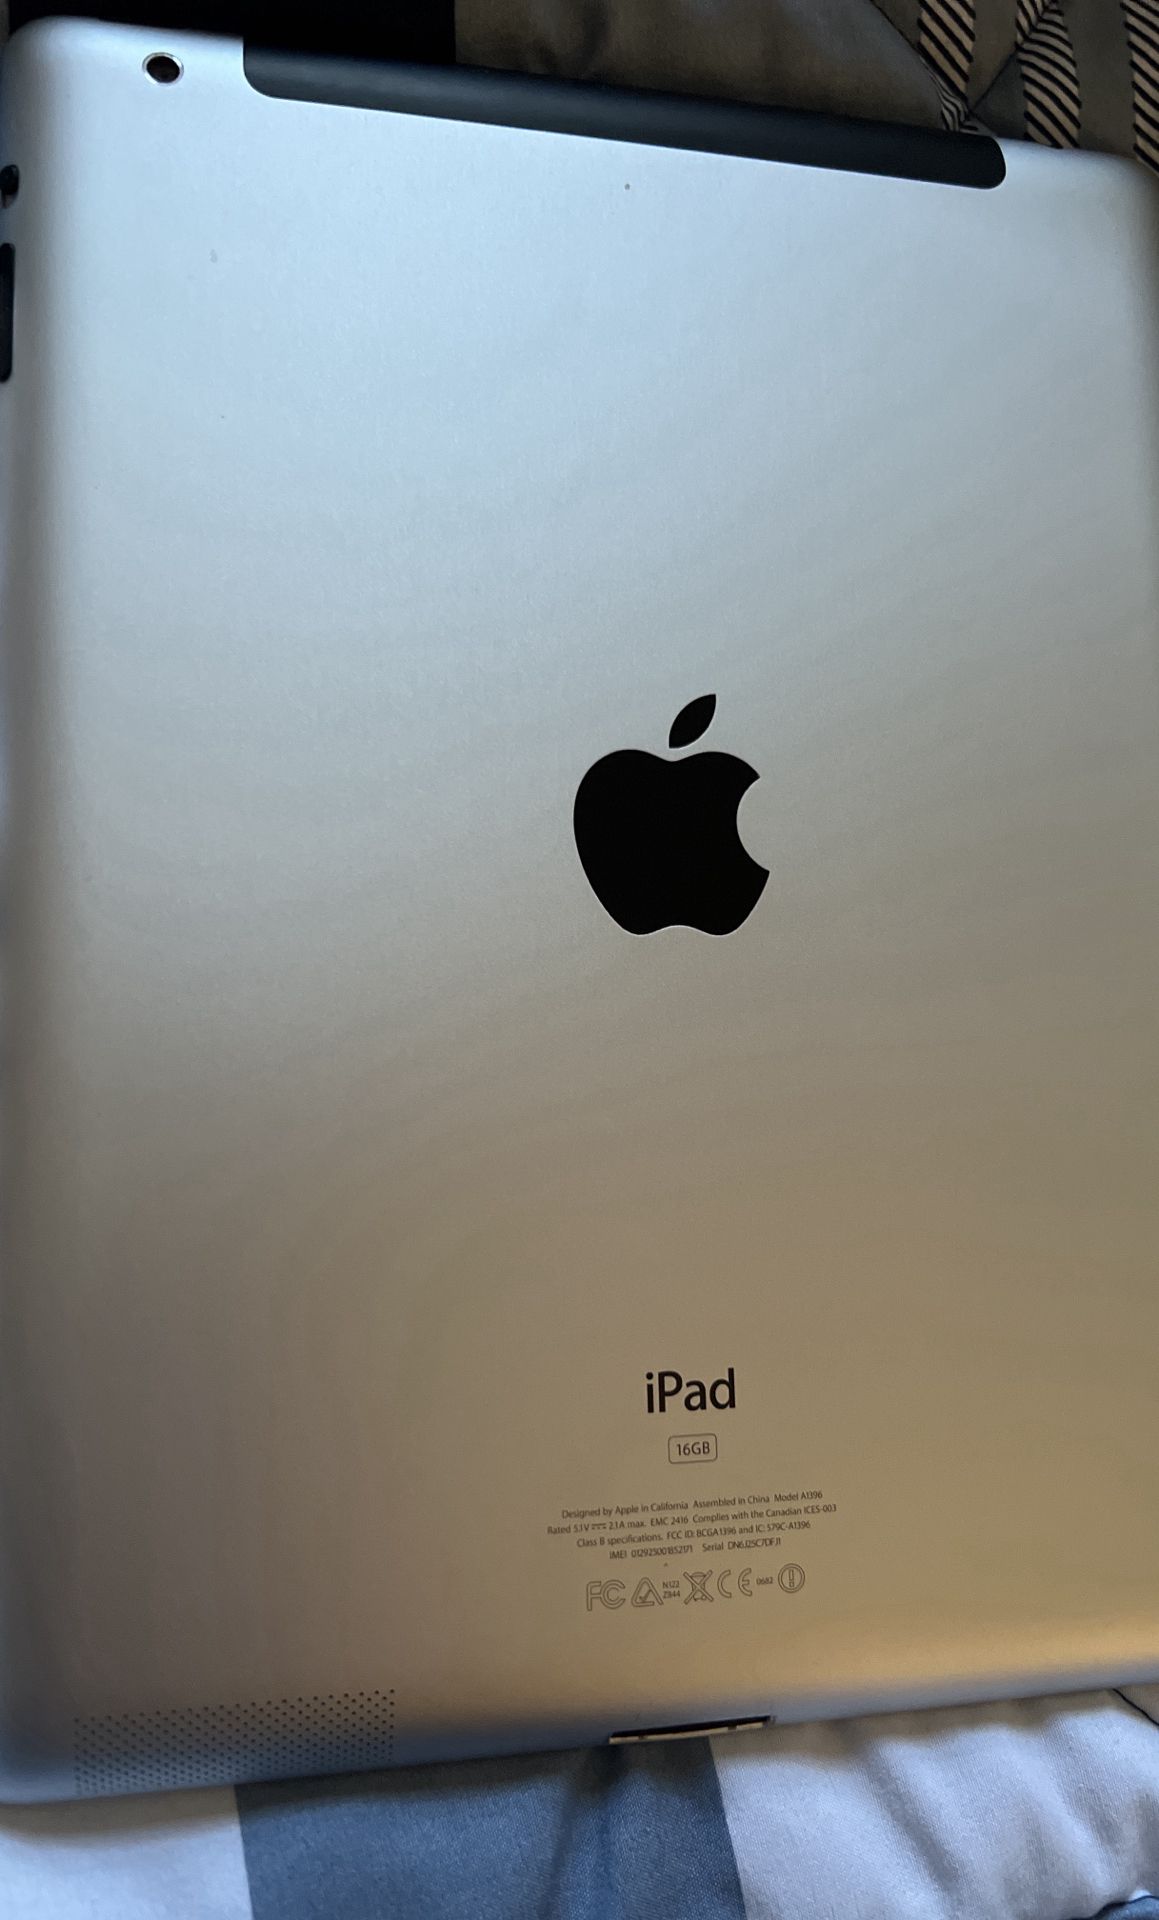 Apple iPad  2 - AT&T Cellular Data  $75 